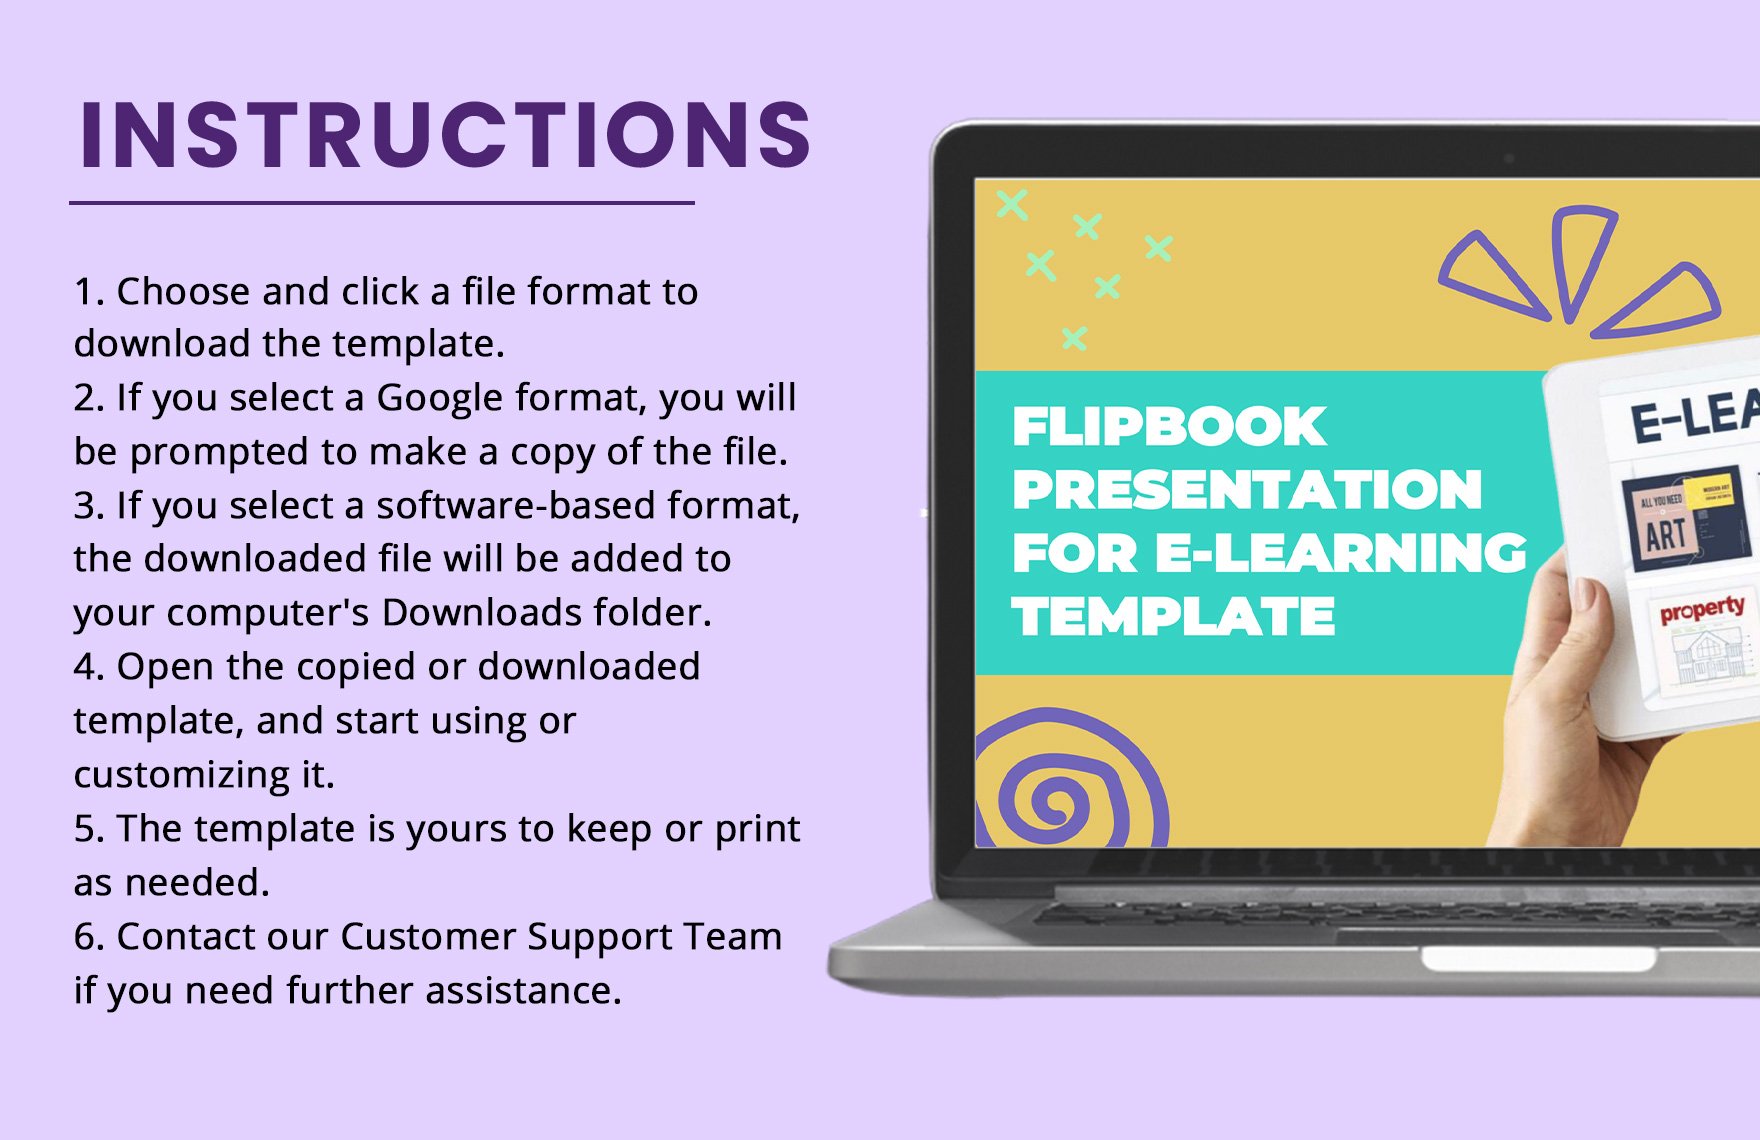 Flipbook Presentation for E-Learning Template